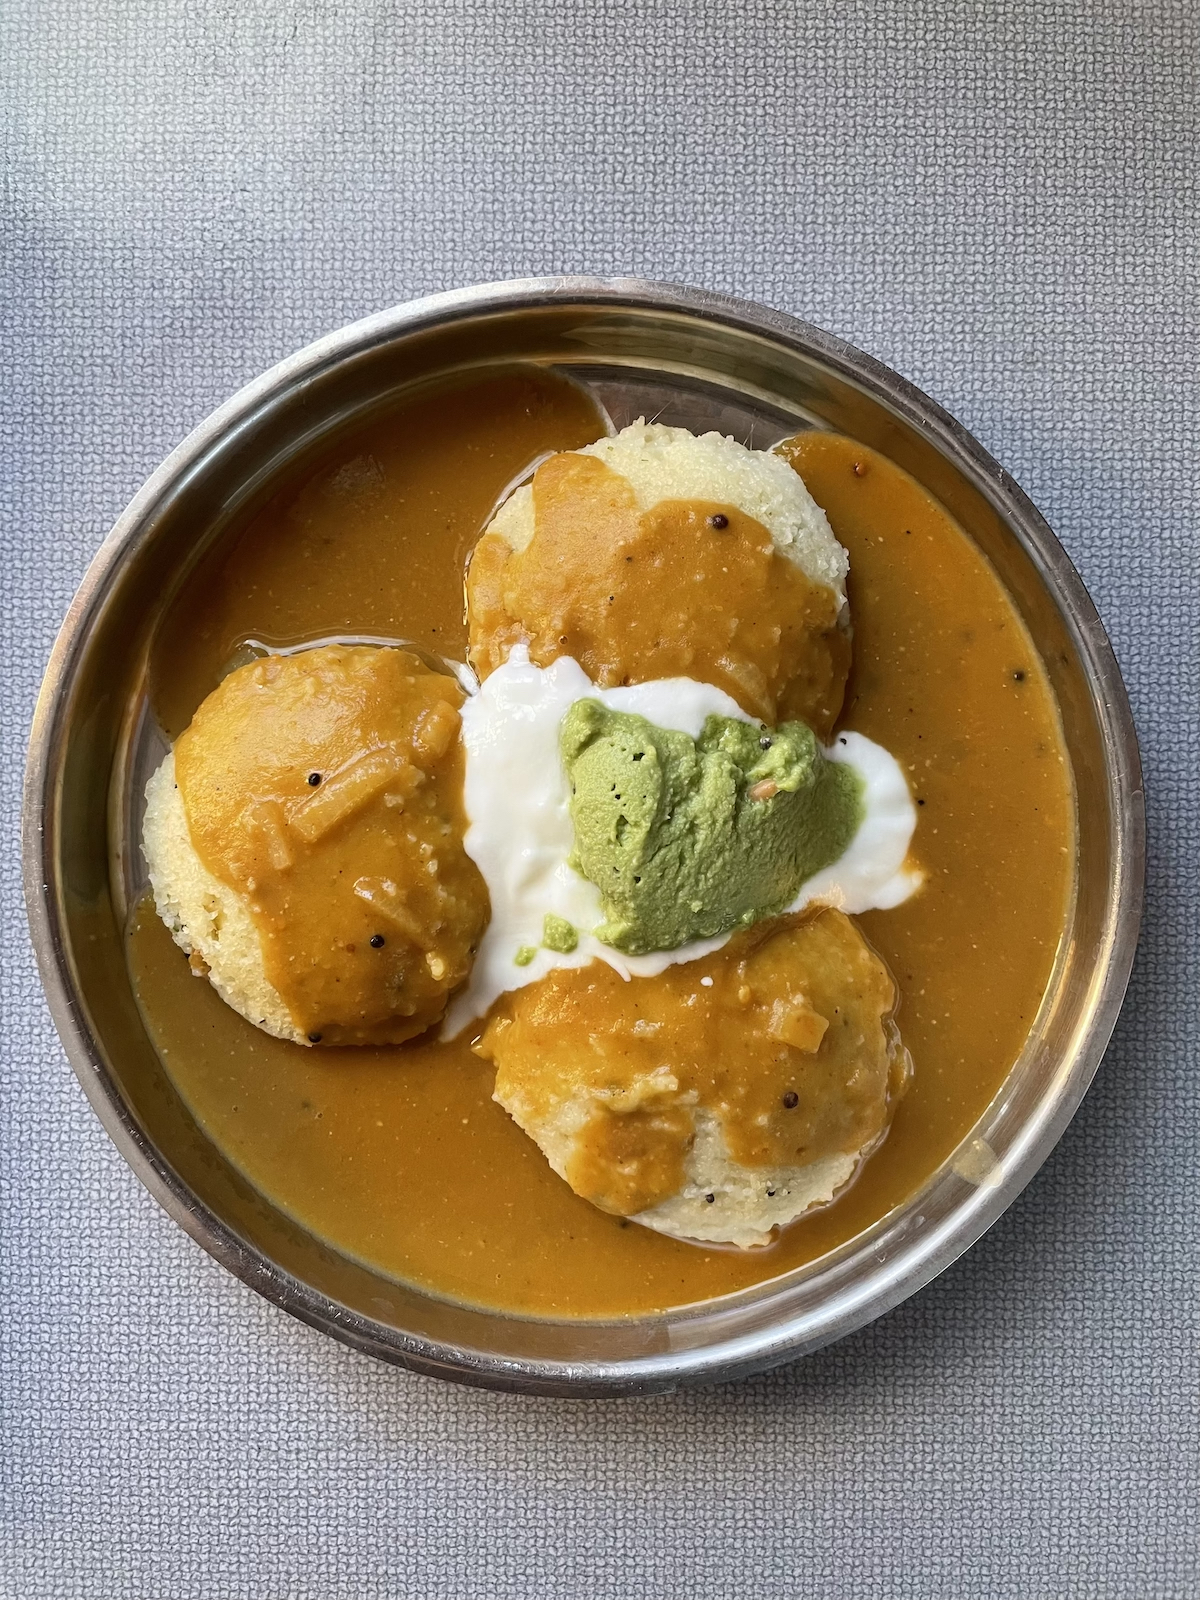 idli-sambar-and-coconut-chutney-recipe-from-my-cookbook.-my-kids-love-it